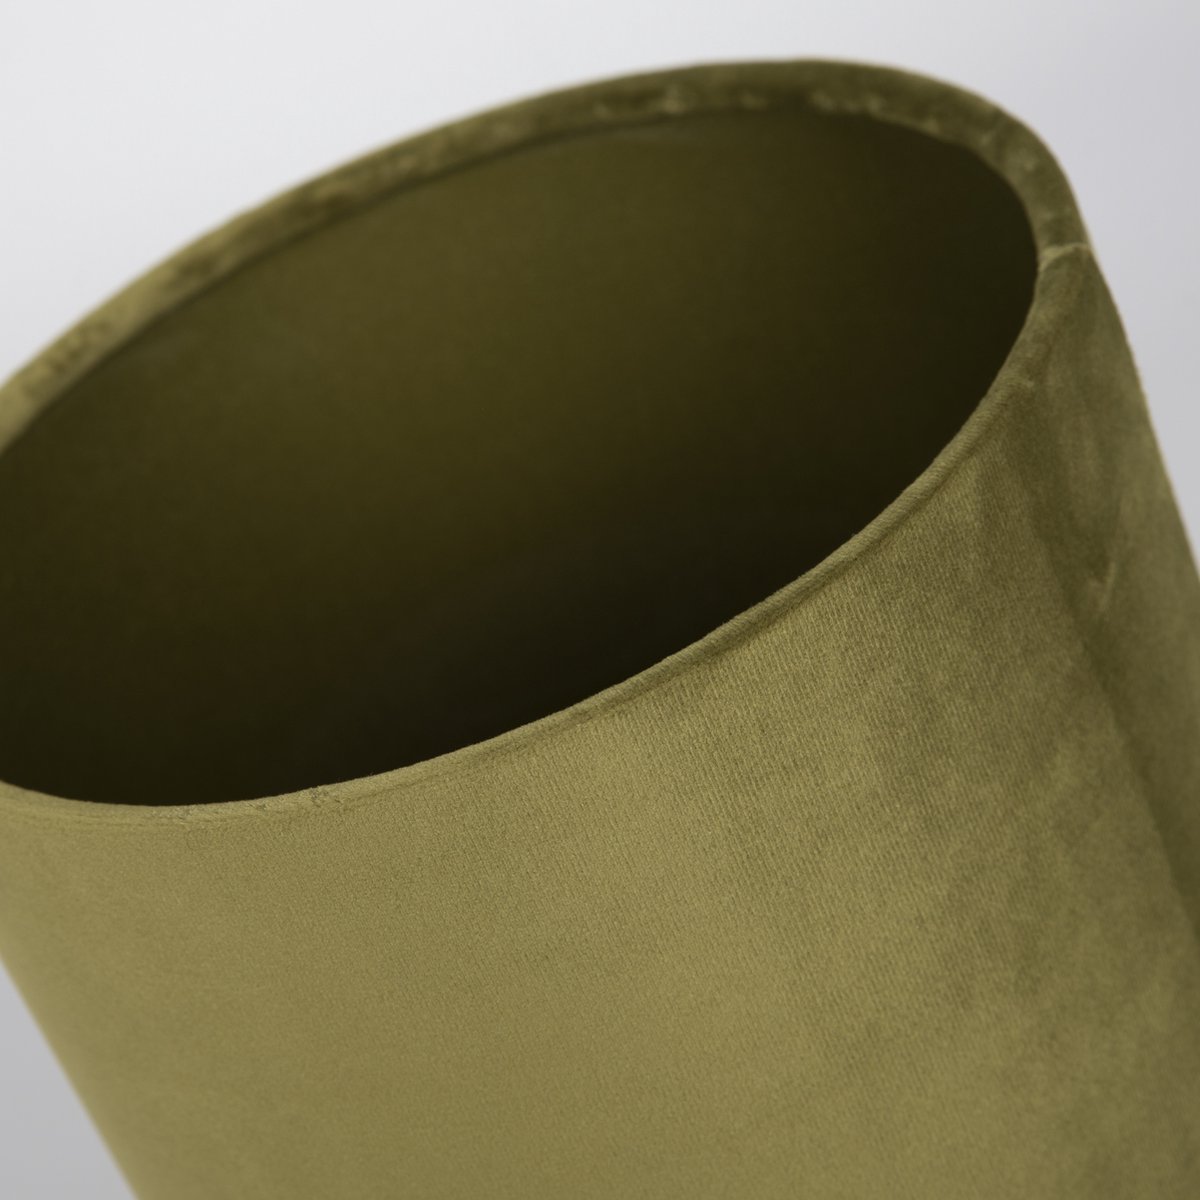 Uniqq Lampenkap velours / stof groen transparant Ø 20 cm - 20 cm hoog